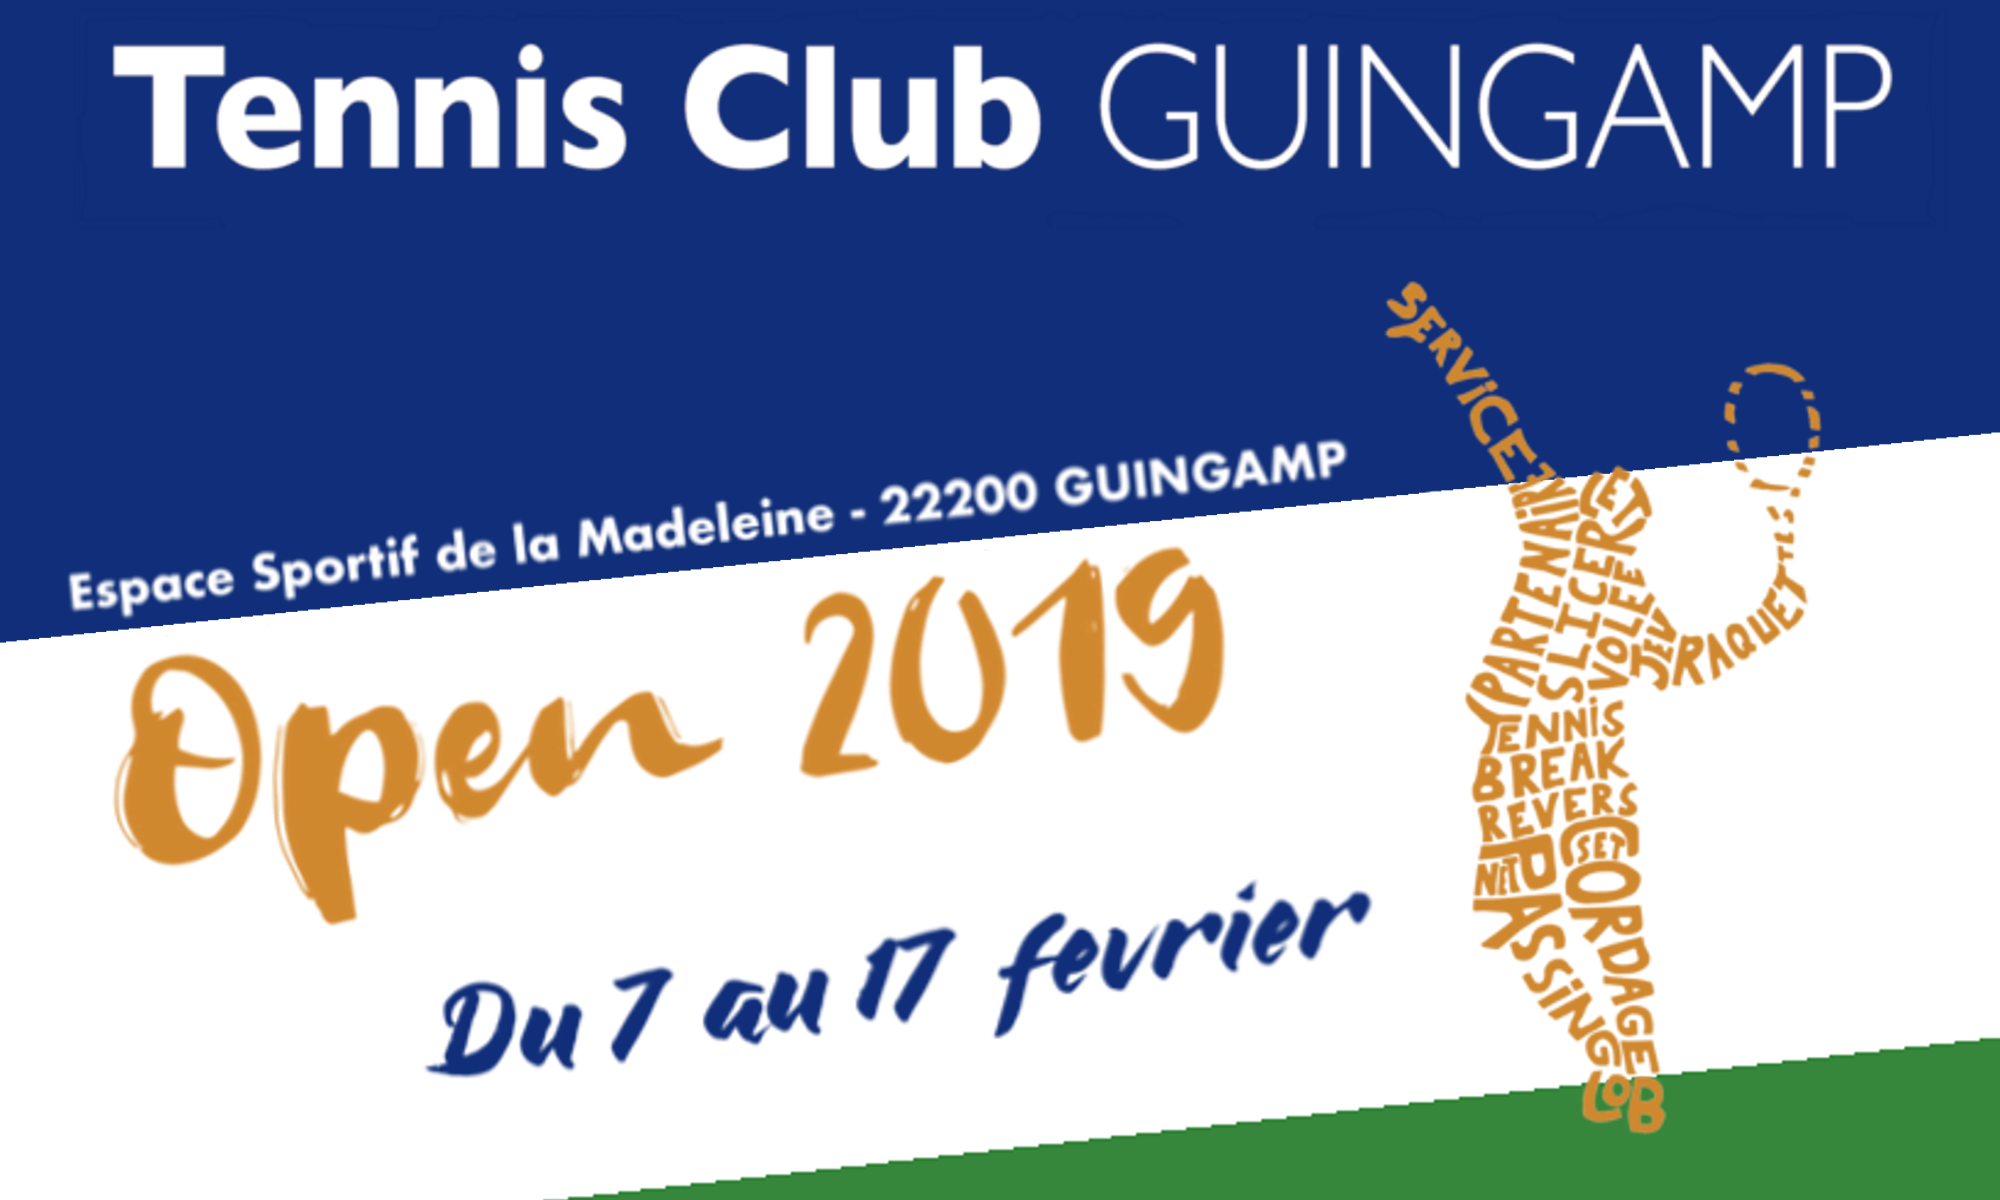 Tennis Club guingamp